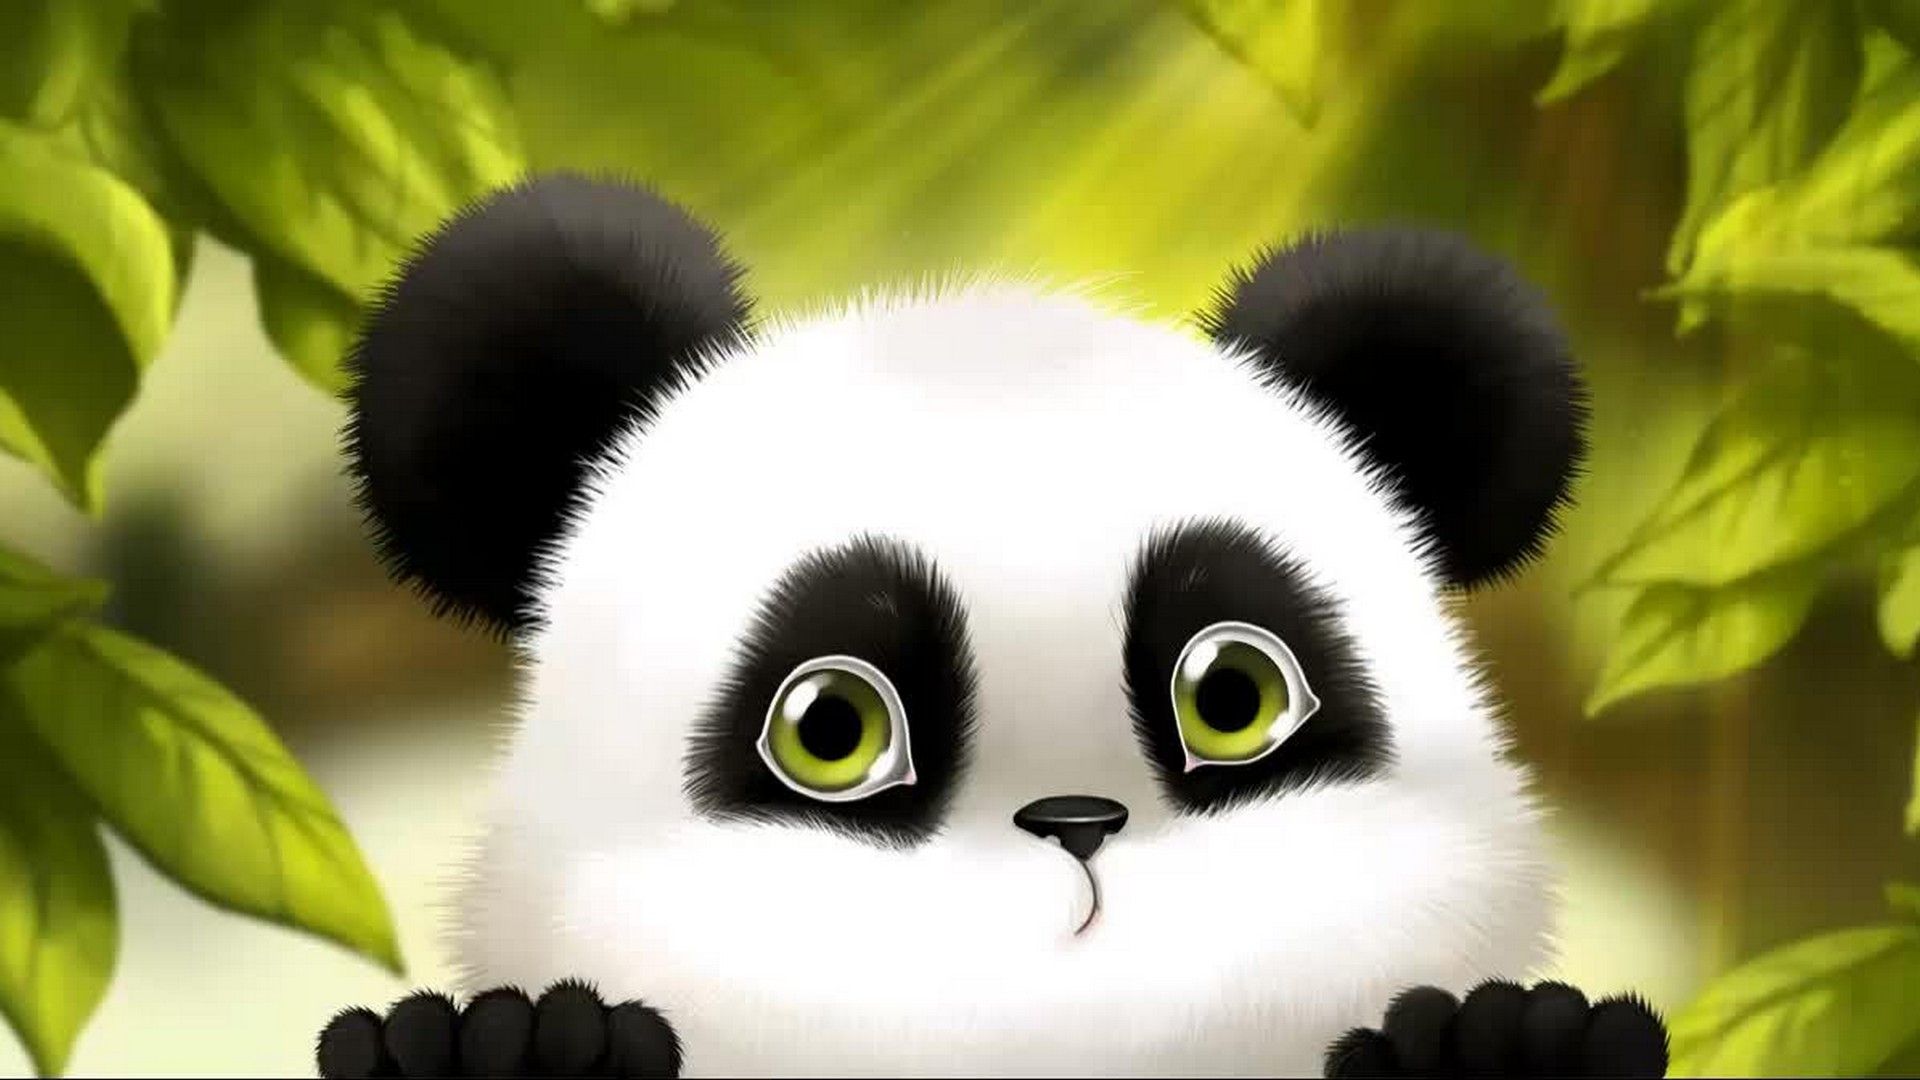 Cute baby panda s on